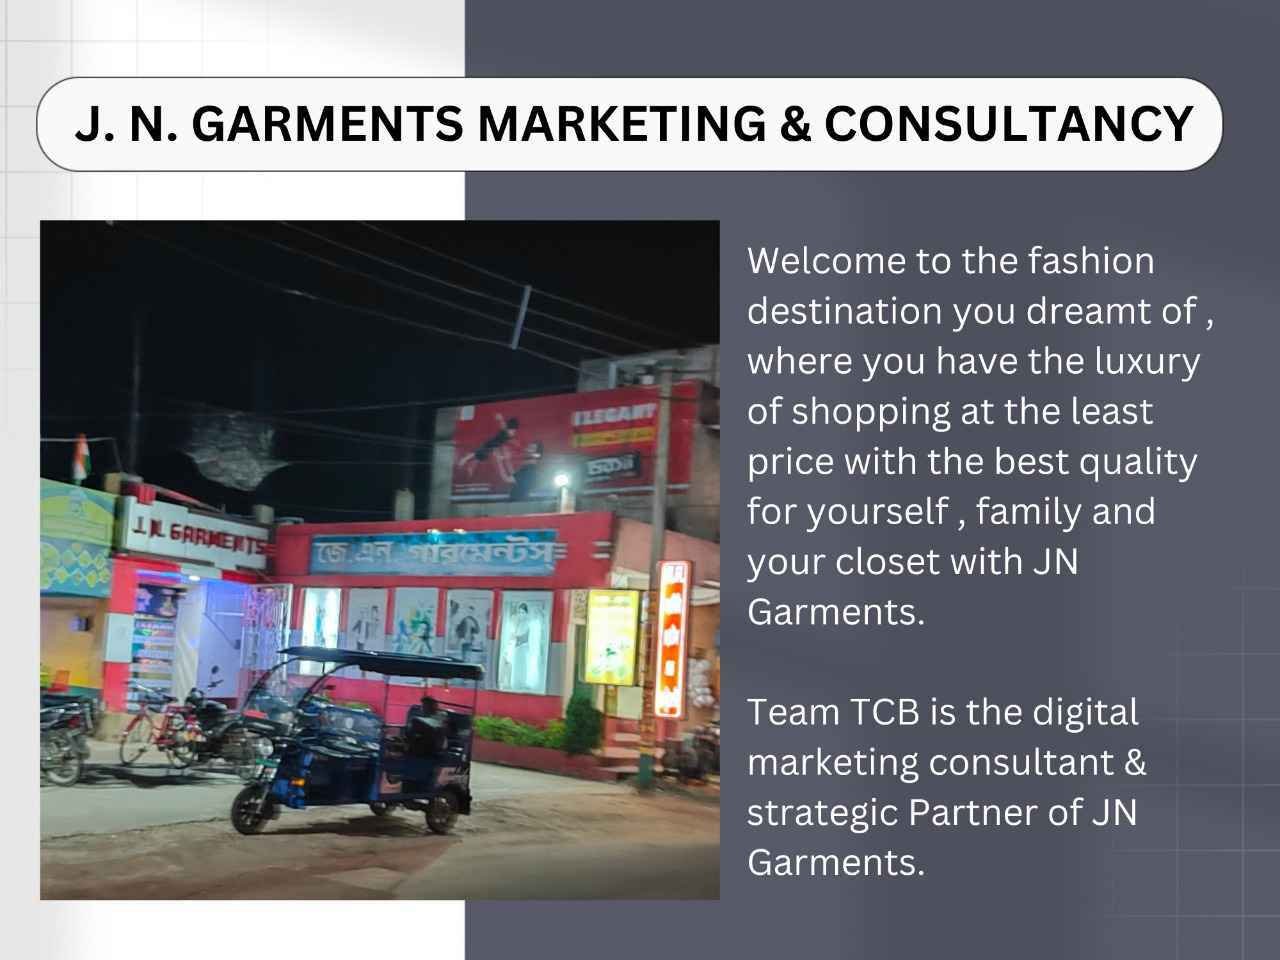 J.N. Garments Marketing & Consultancy